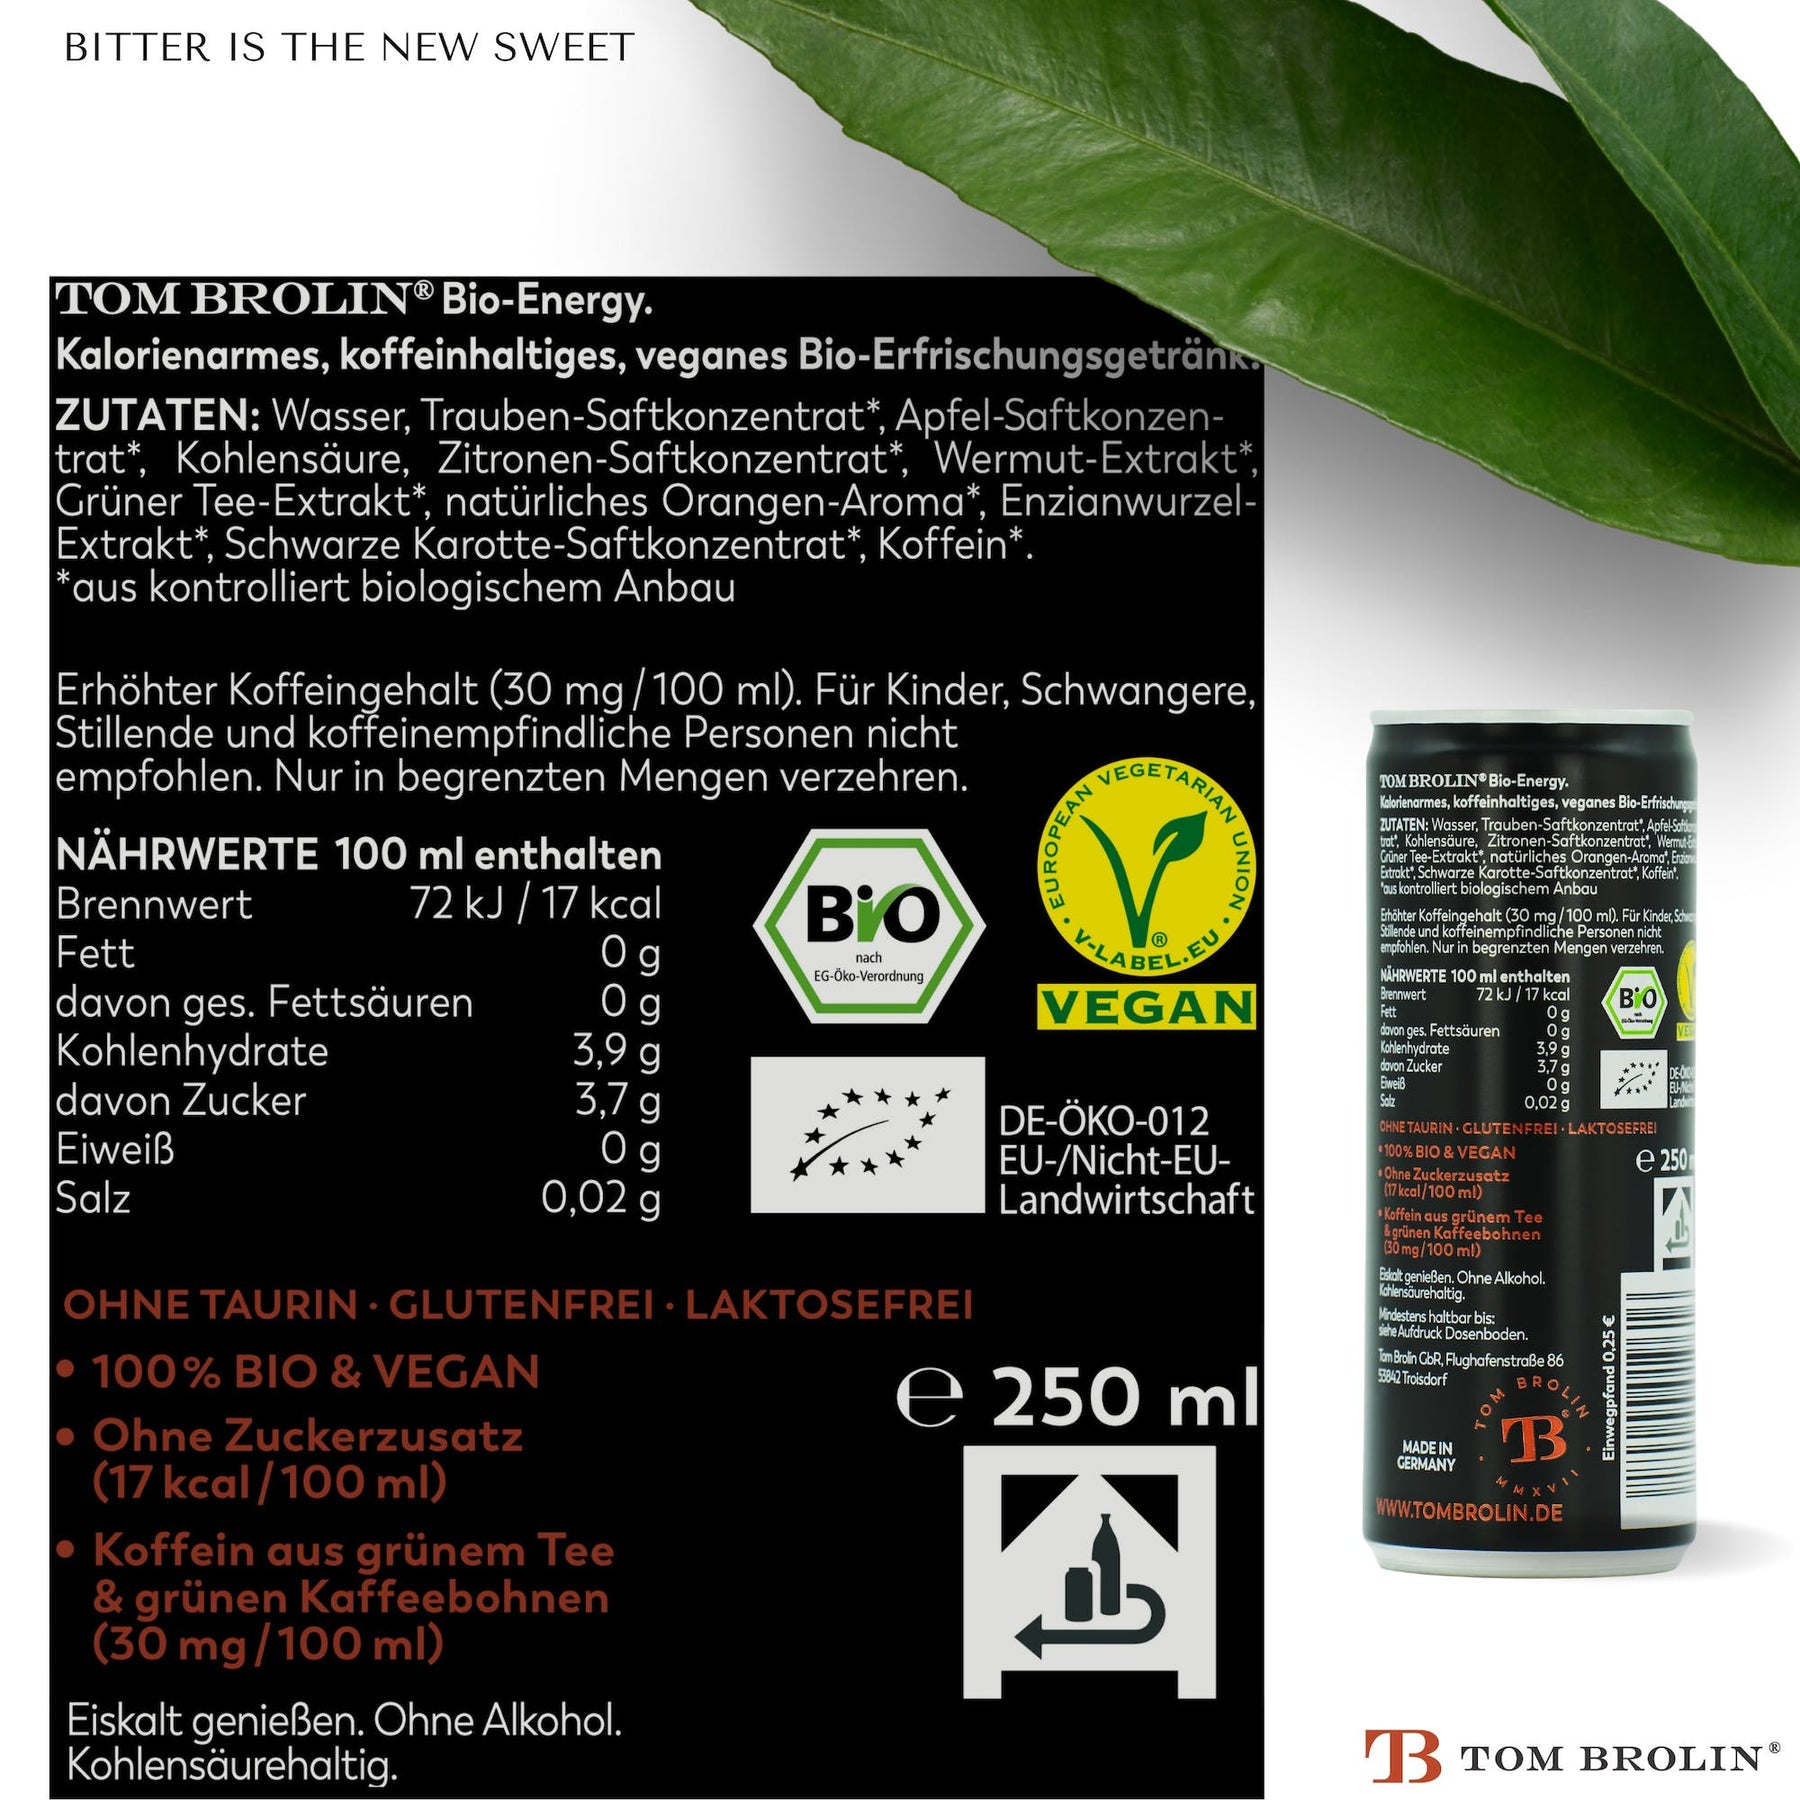 Tom Brolin® — Orange Vermouth Organic